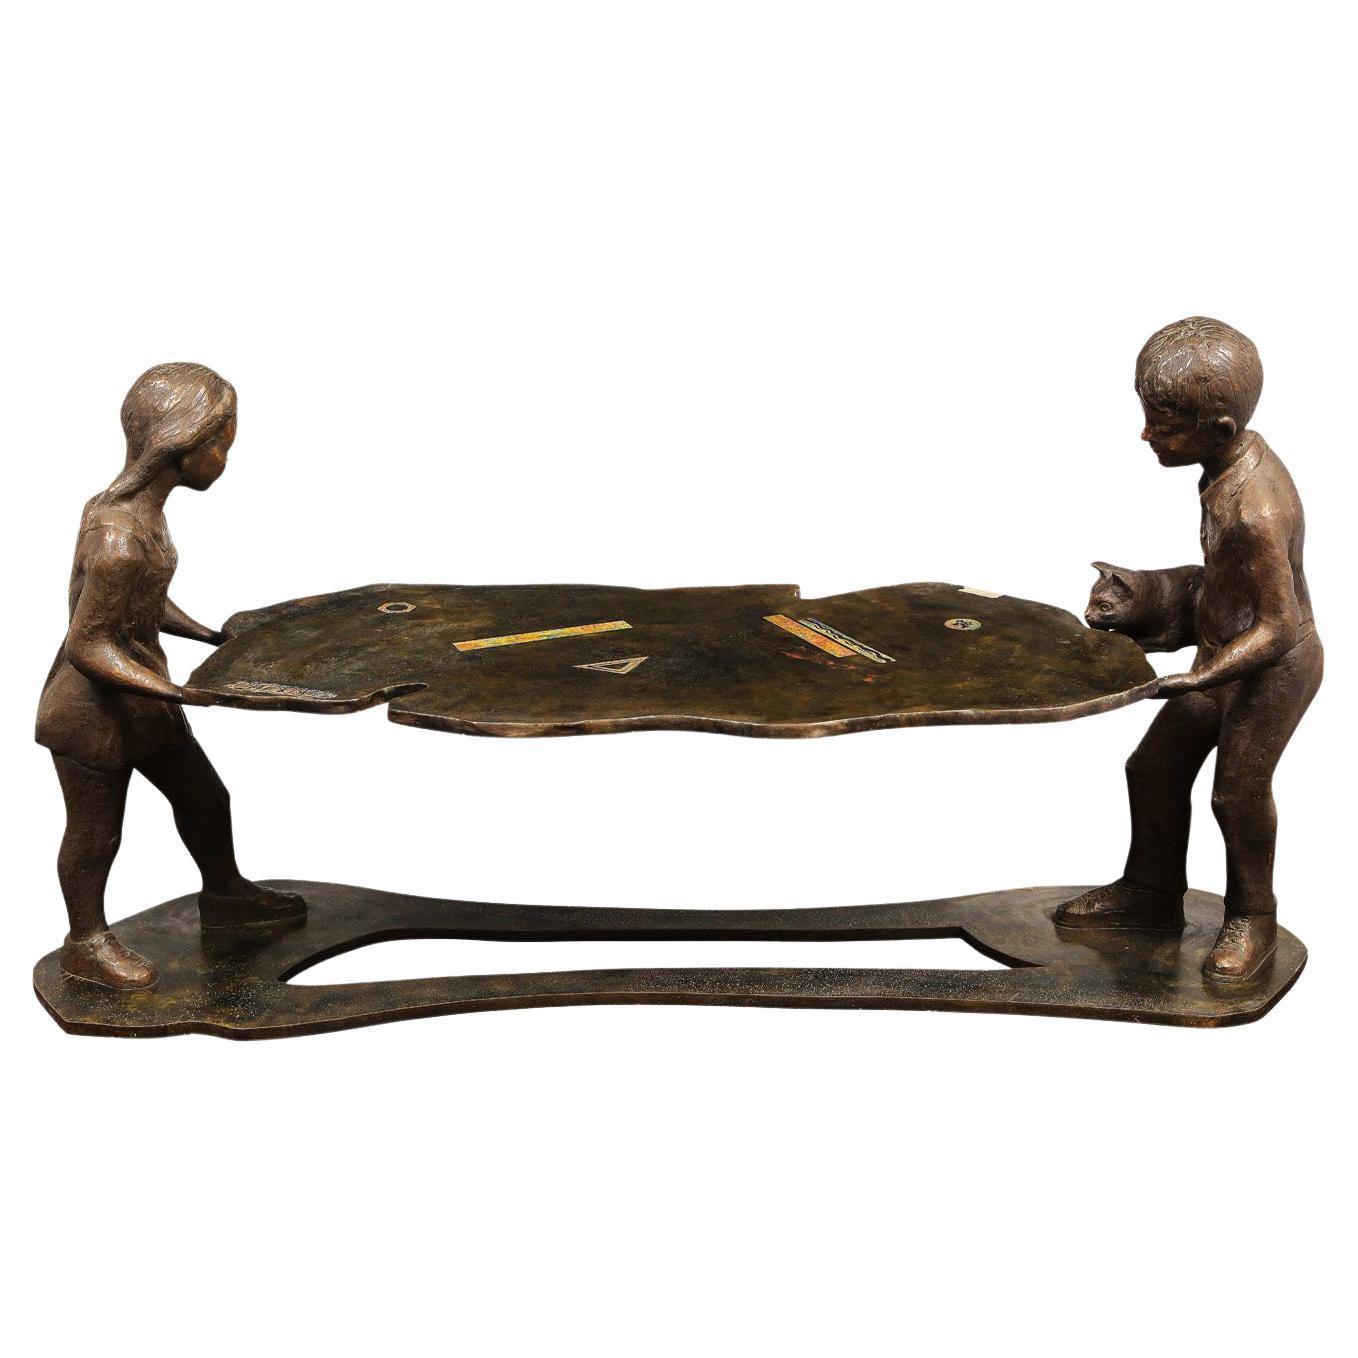 Philip & Kelvin LaVerne Rare "Generation" Sculpture Table 1970s 'Signed'